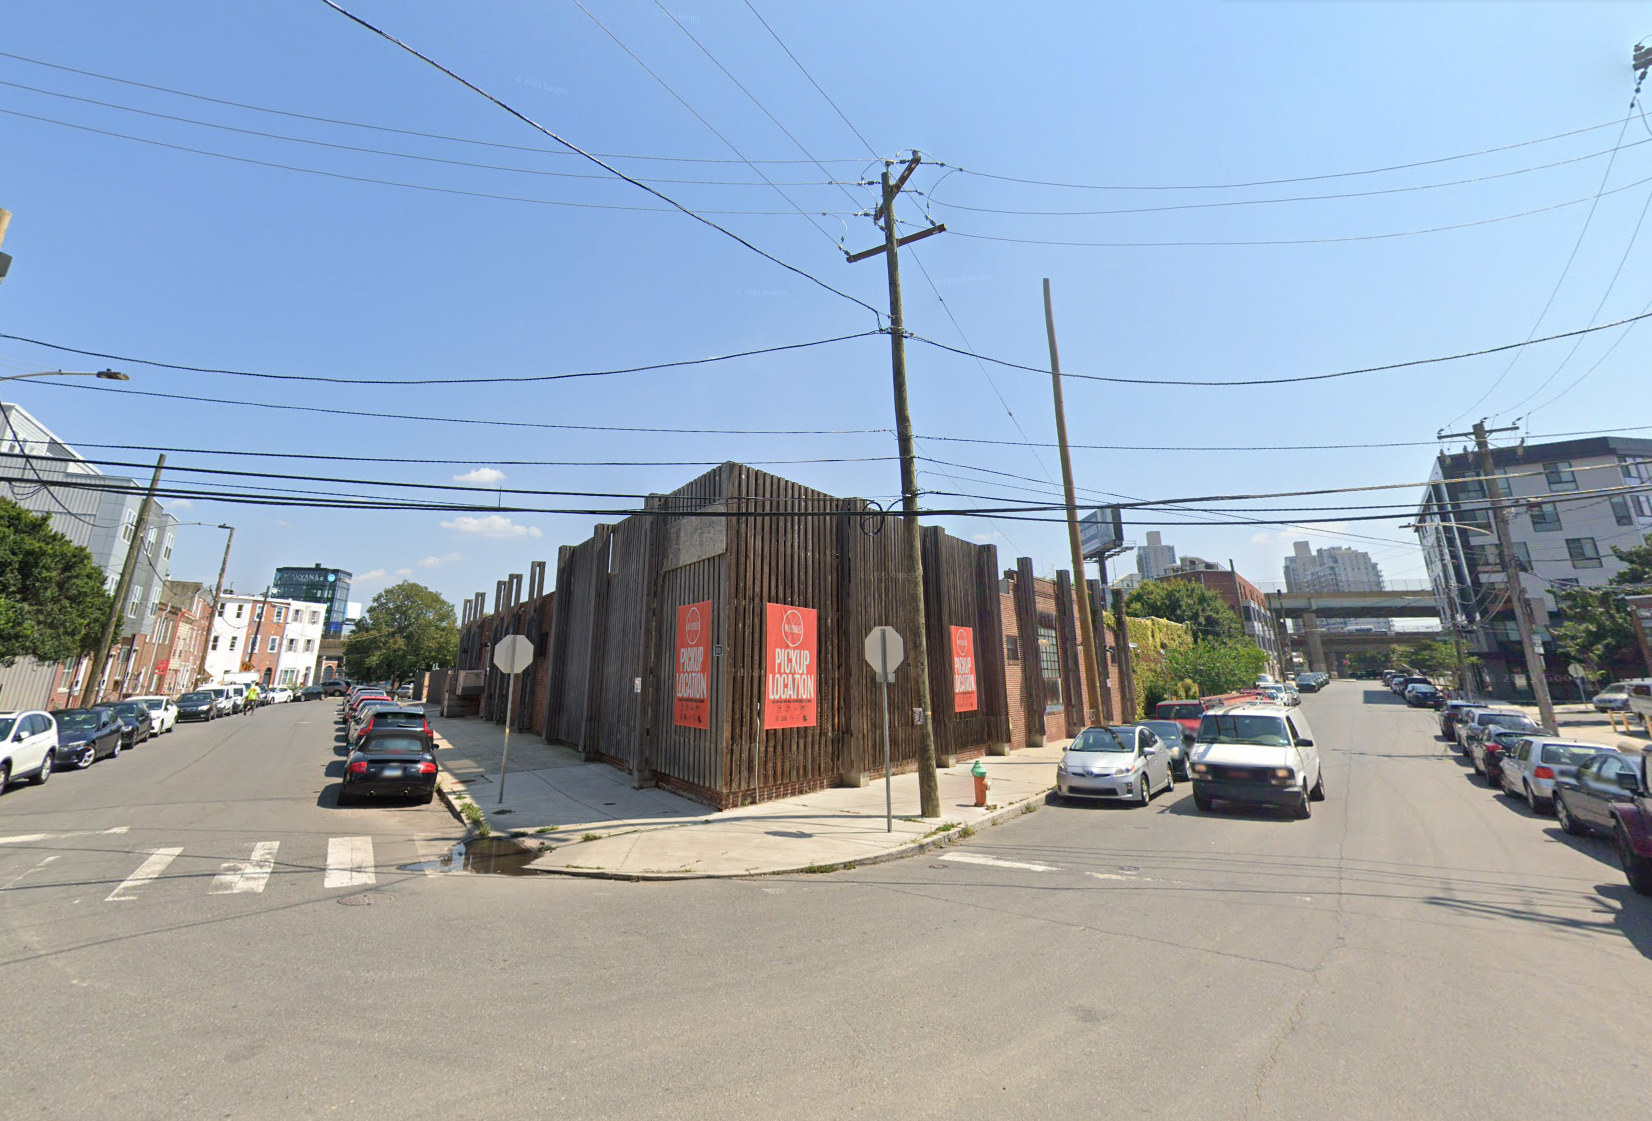 1031 Germantown Avenue prior to redevelopment. Credit: Google Maps